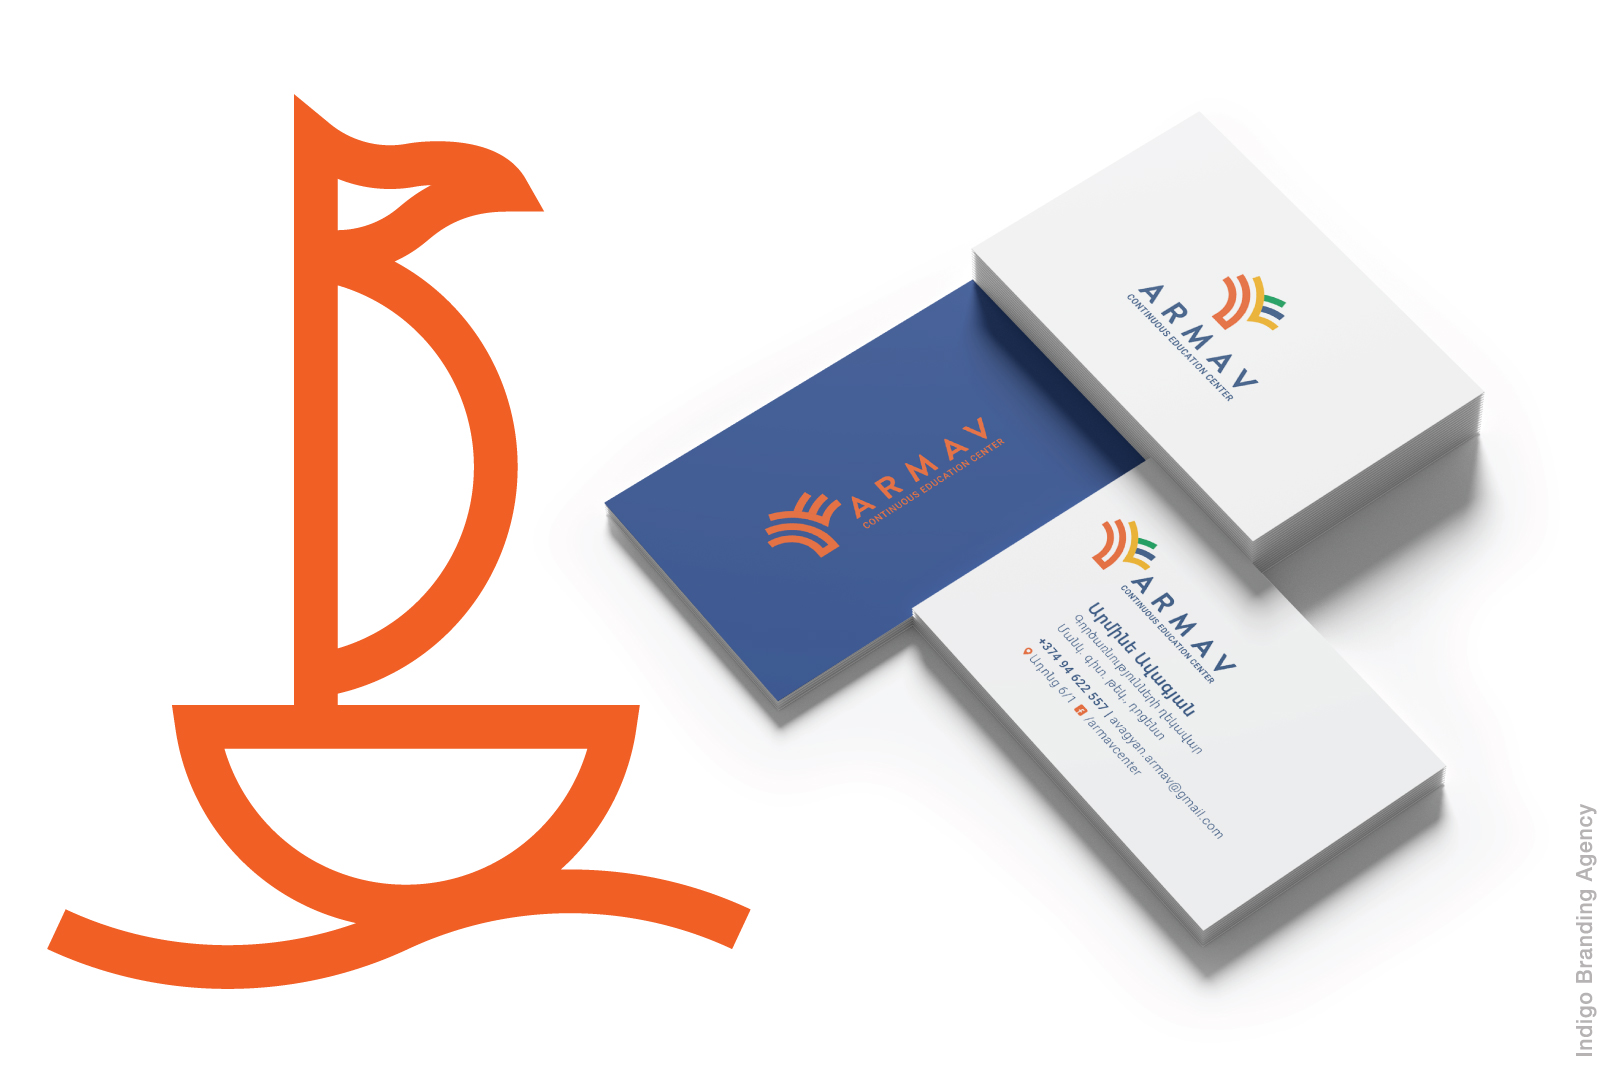 Armav branding and logo design by Indigo branding